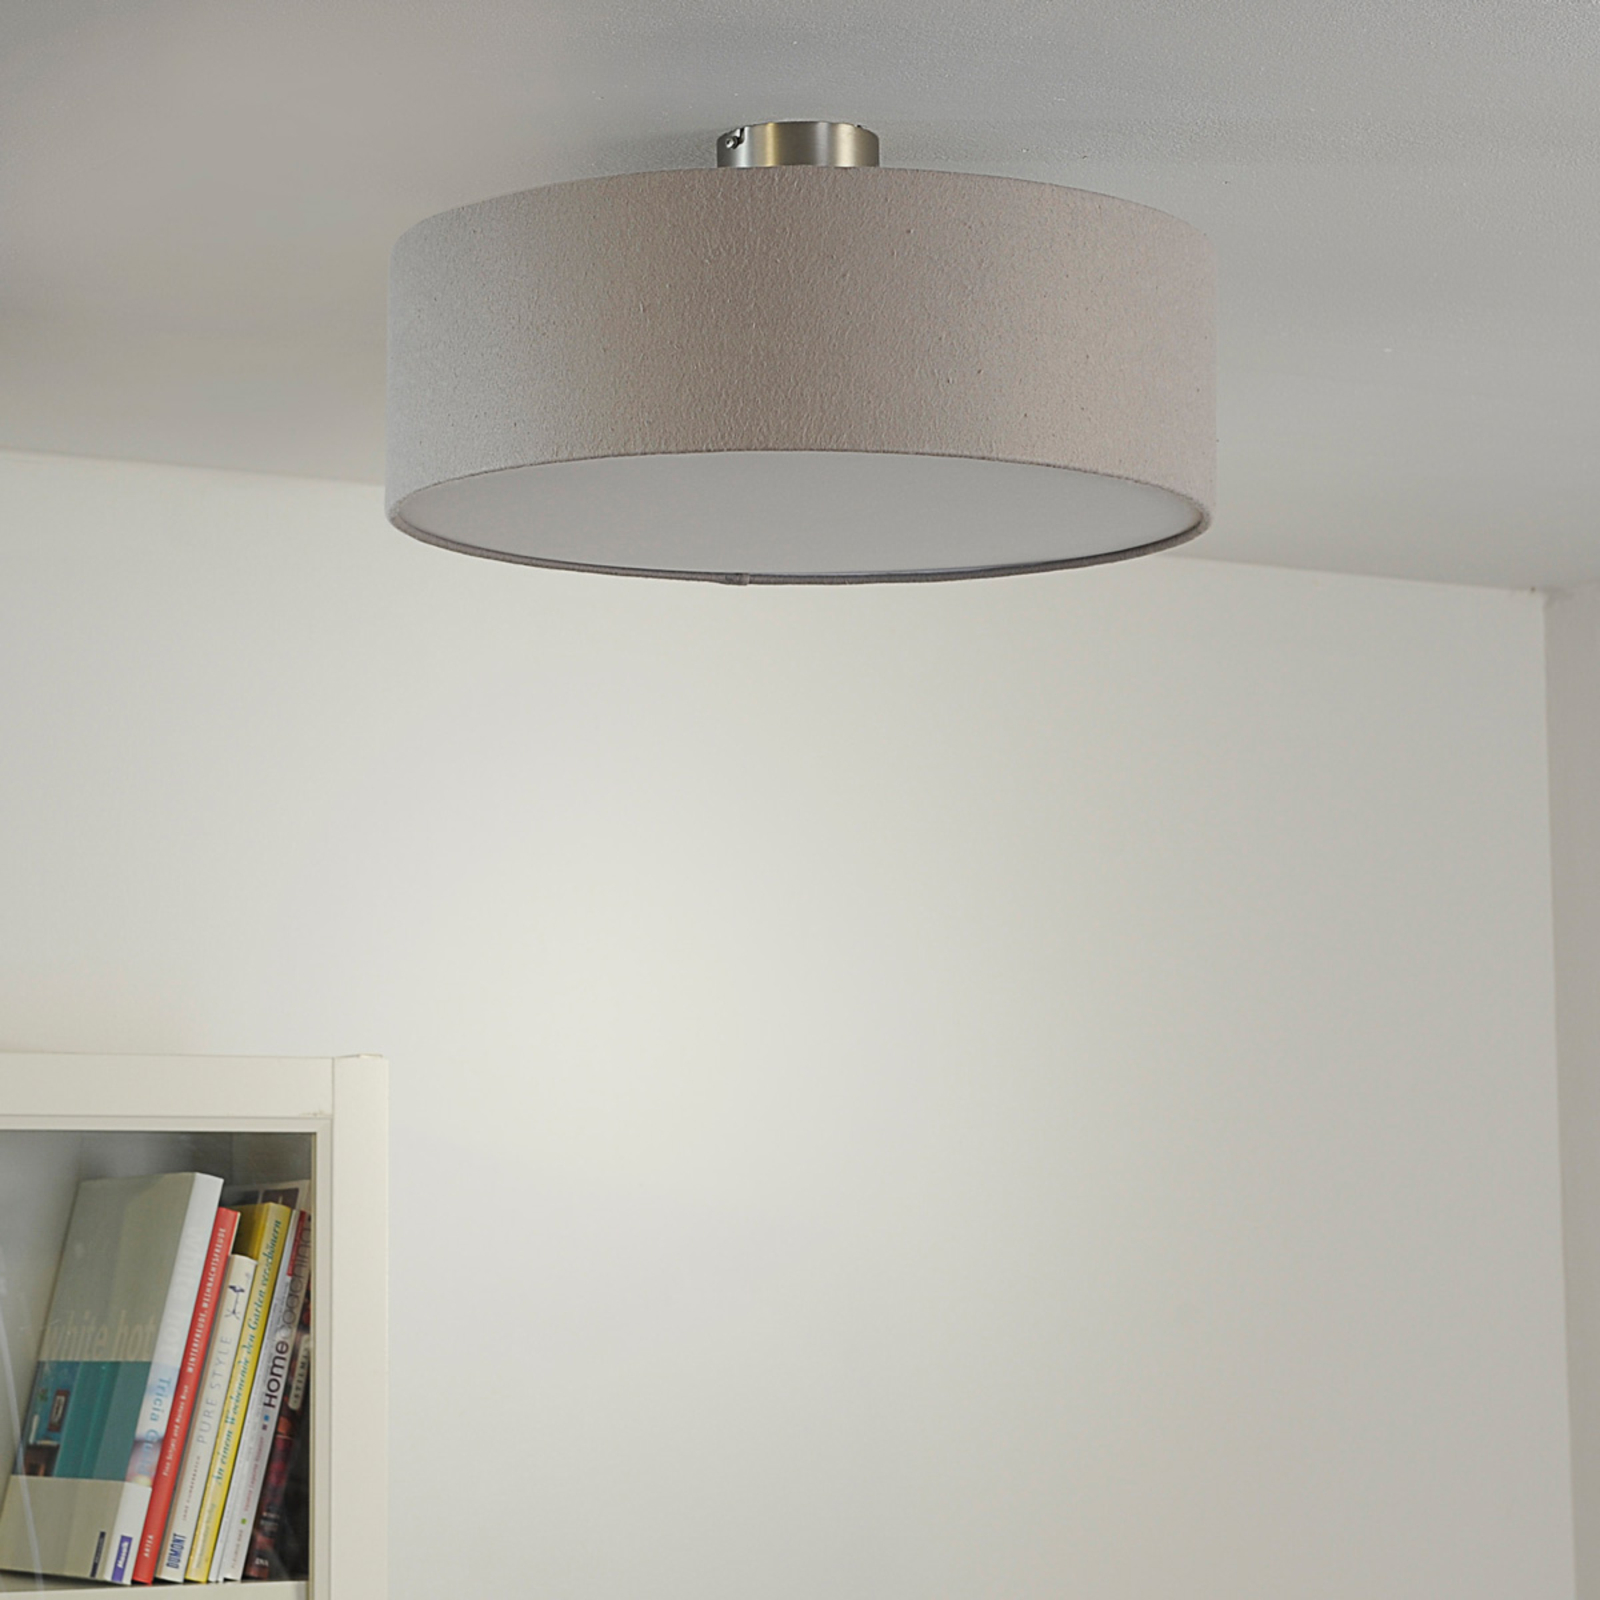 Quitani Gala ceiling light, Ø 50 cm, grey felt shade